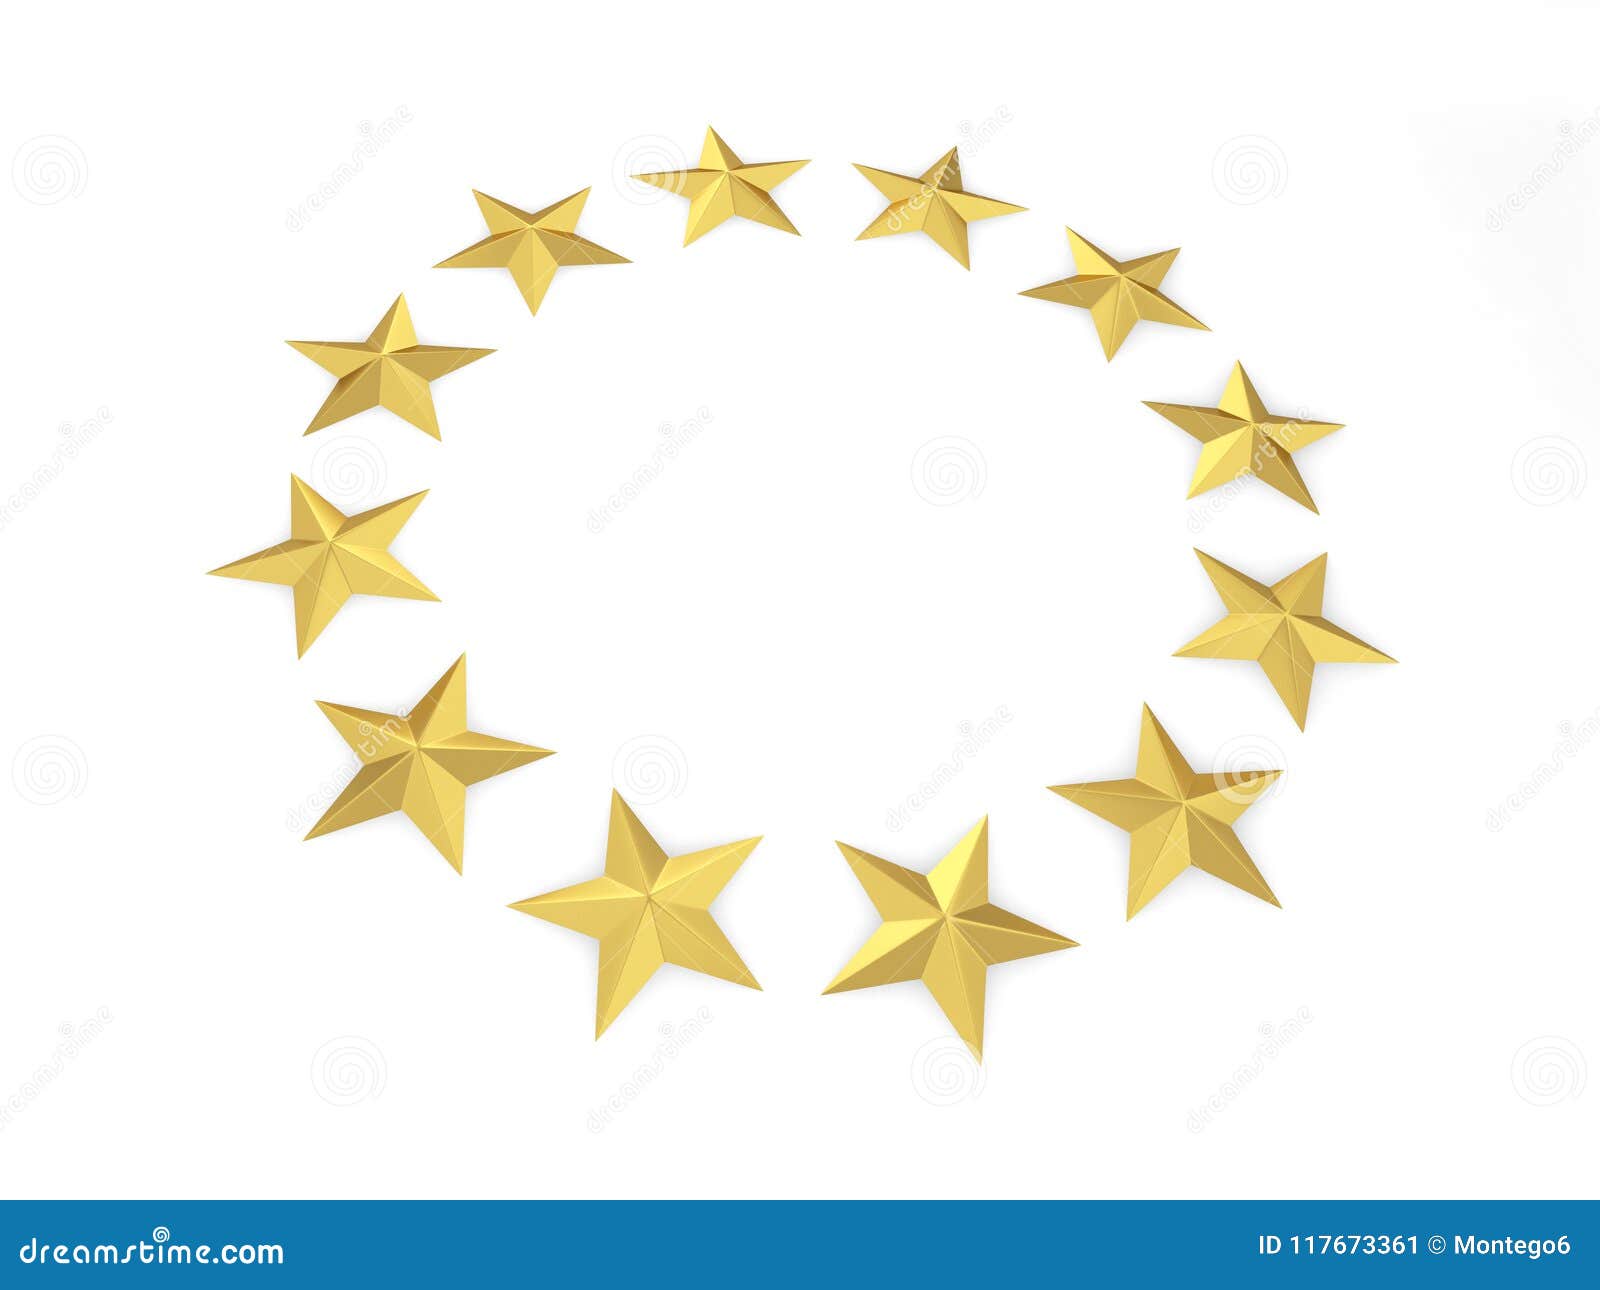 Stars in a circle shape stock illustration. Illustration of label ...